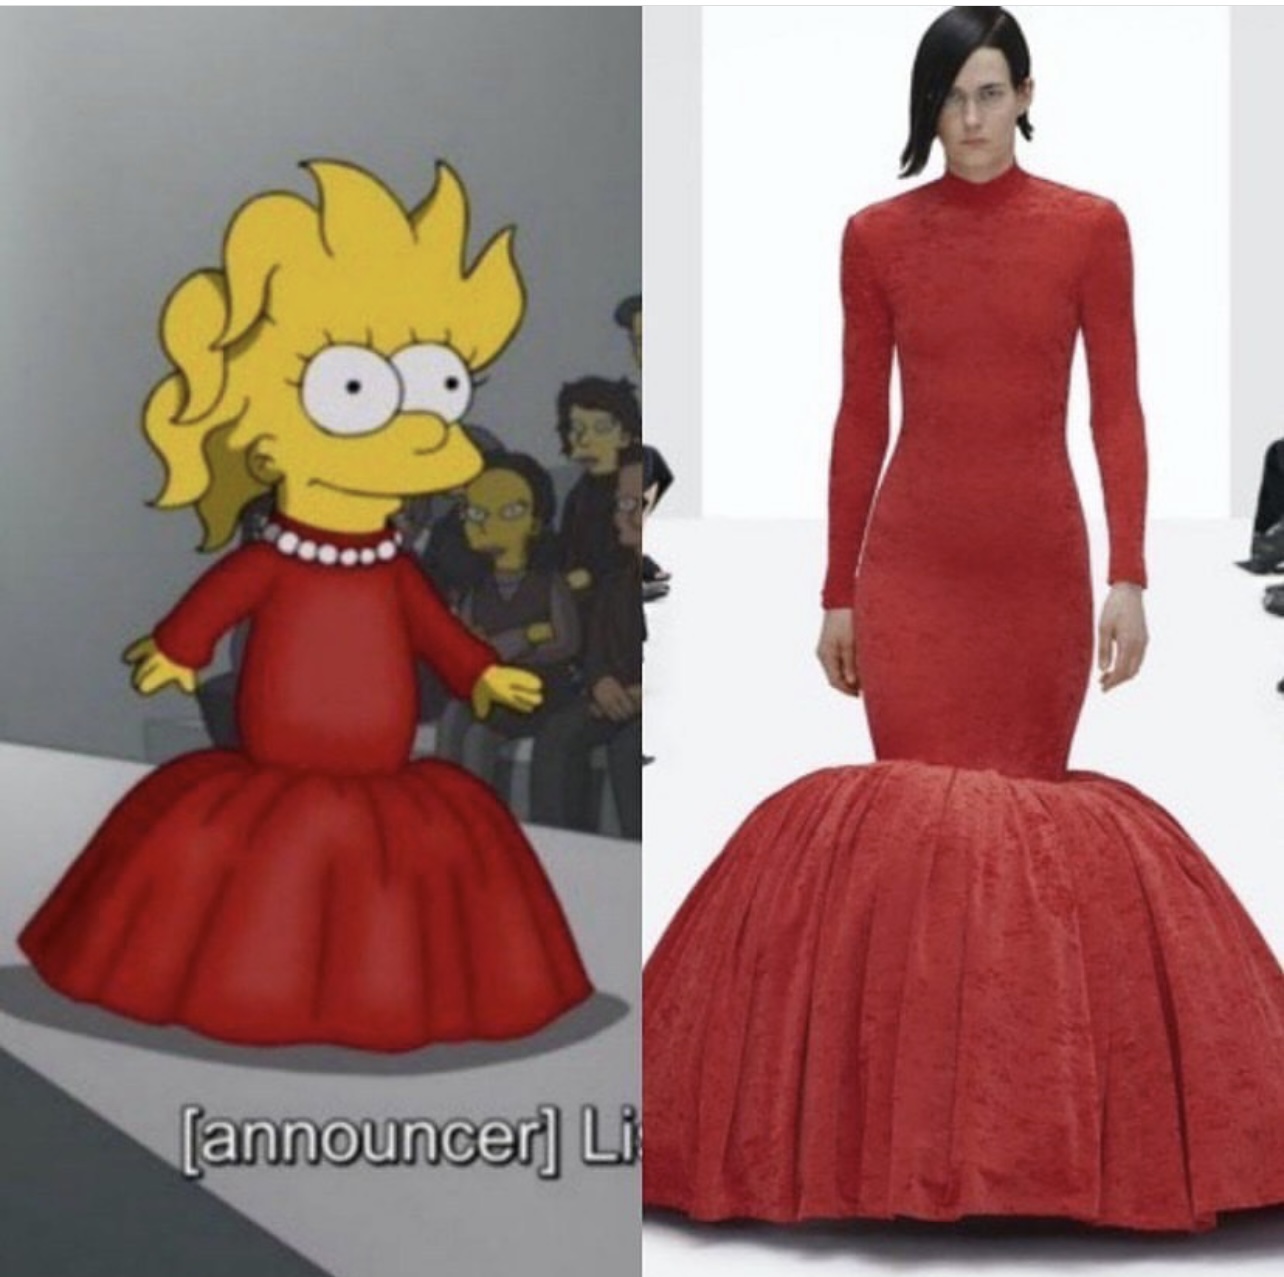 Oι Simpsons στο Fashion week στο Παρίσι!